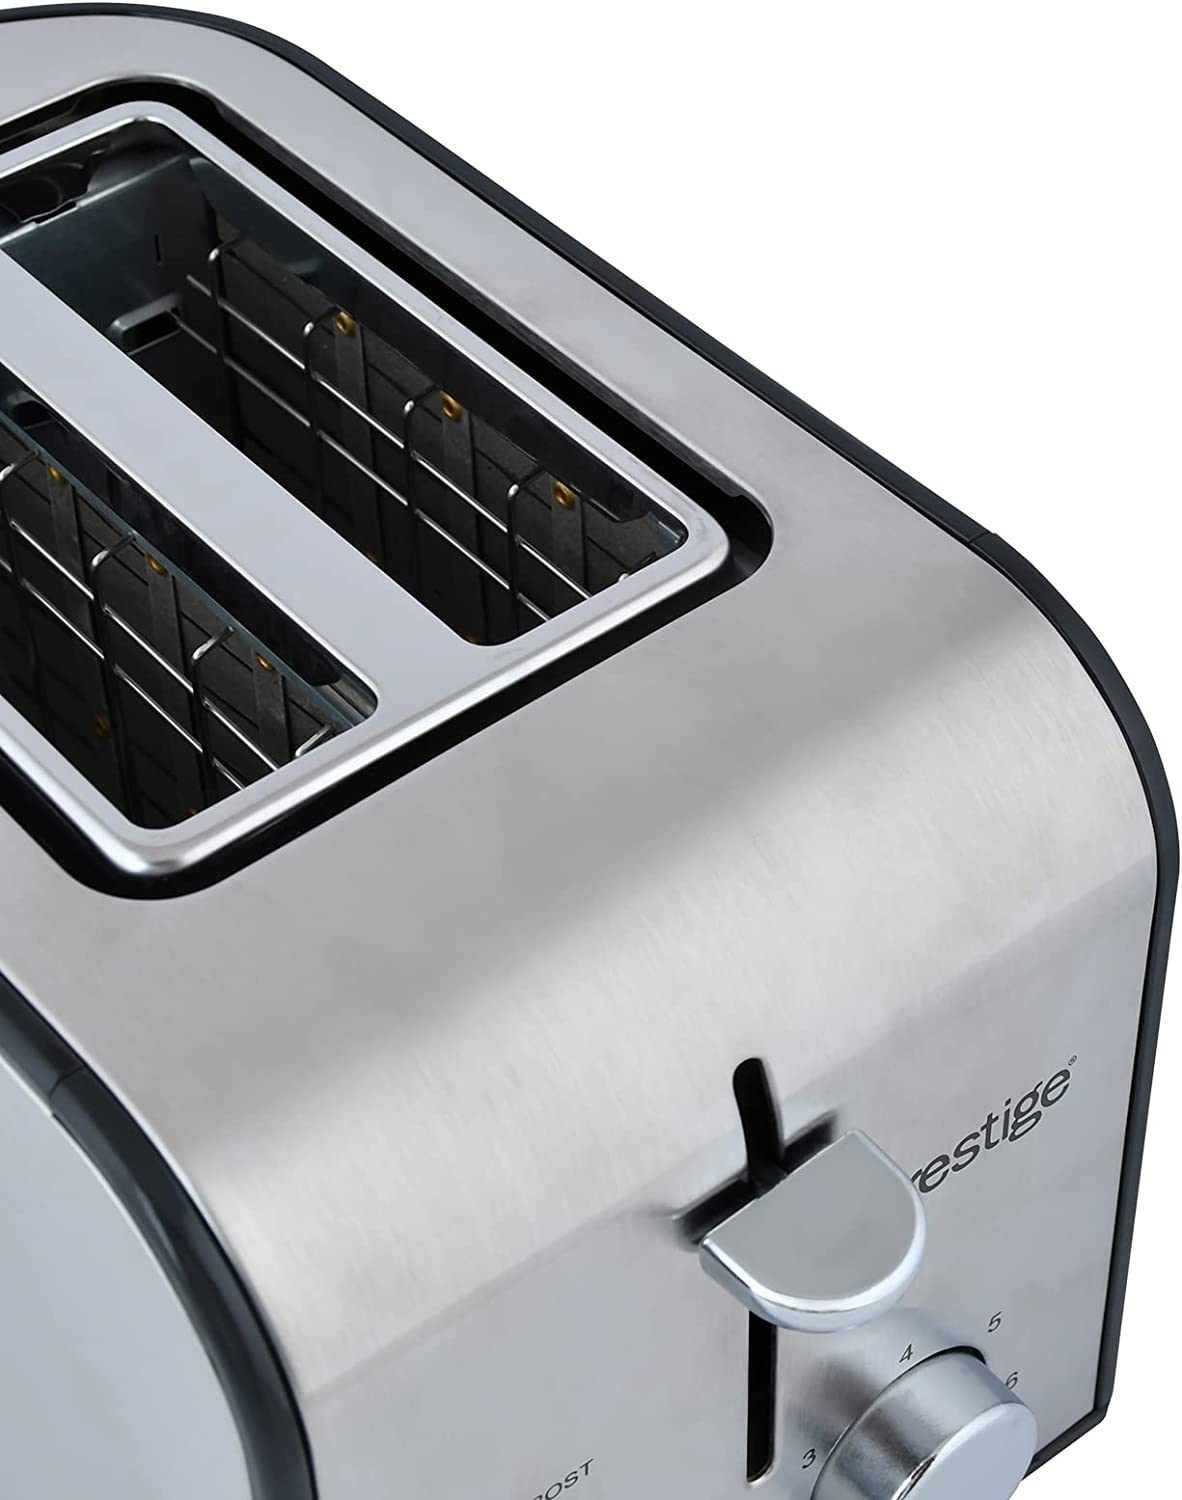 Prestige Stainless Steel 2 Slice Bread Toaster - 54905